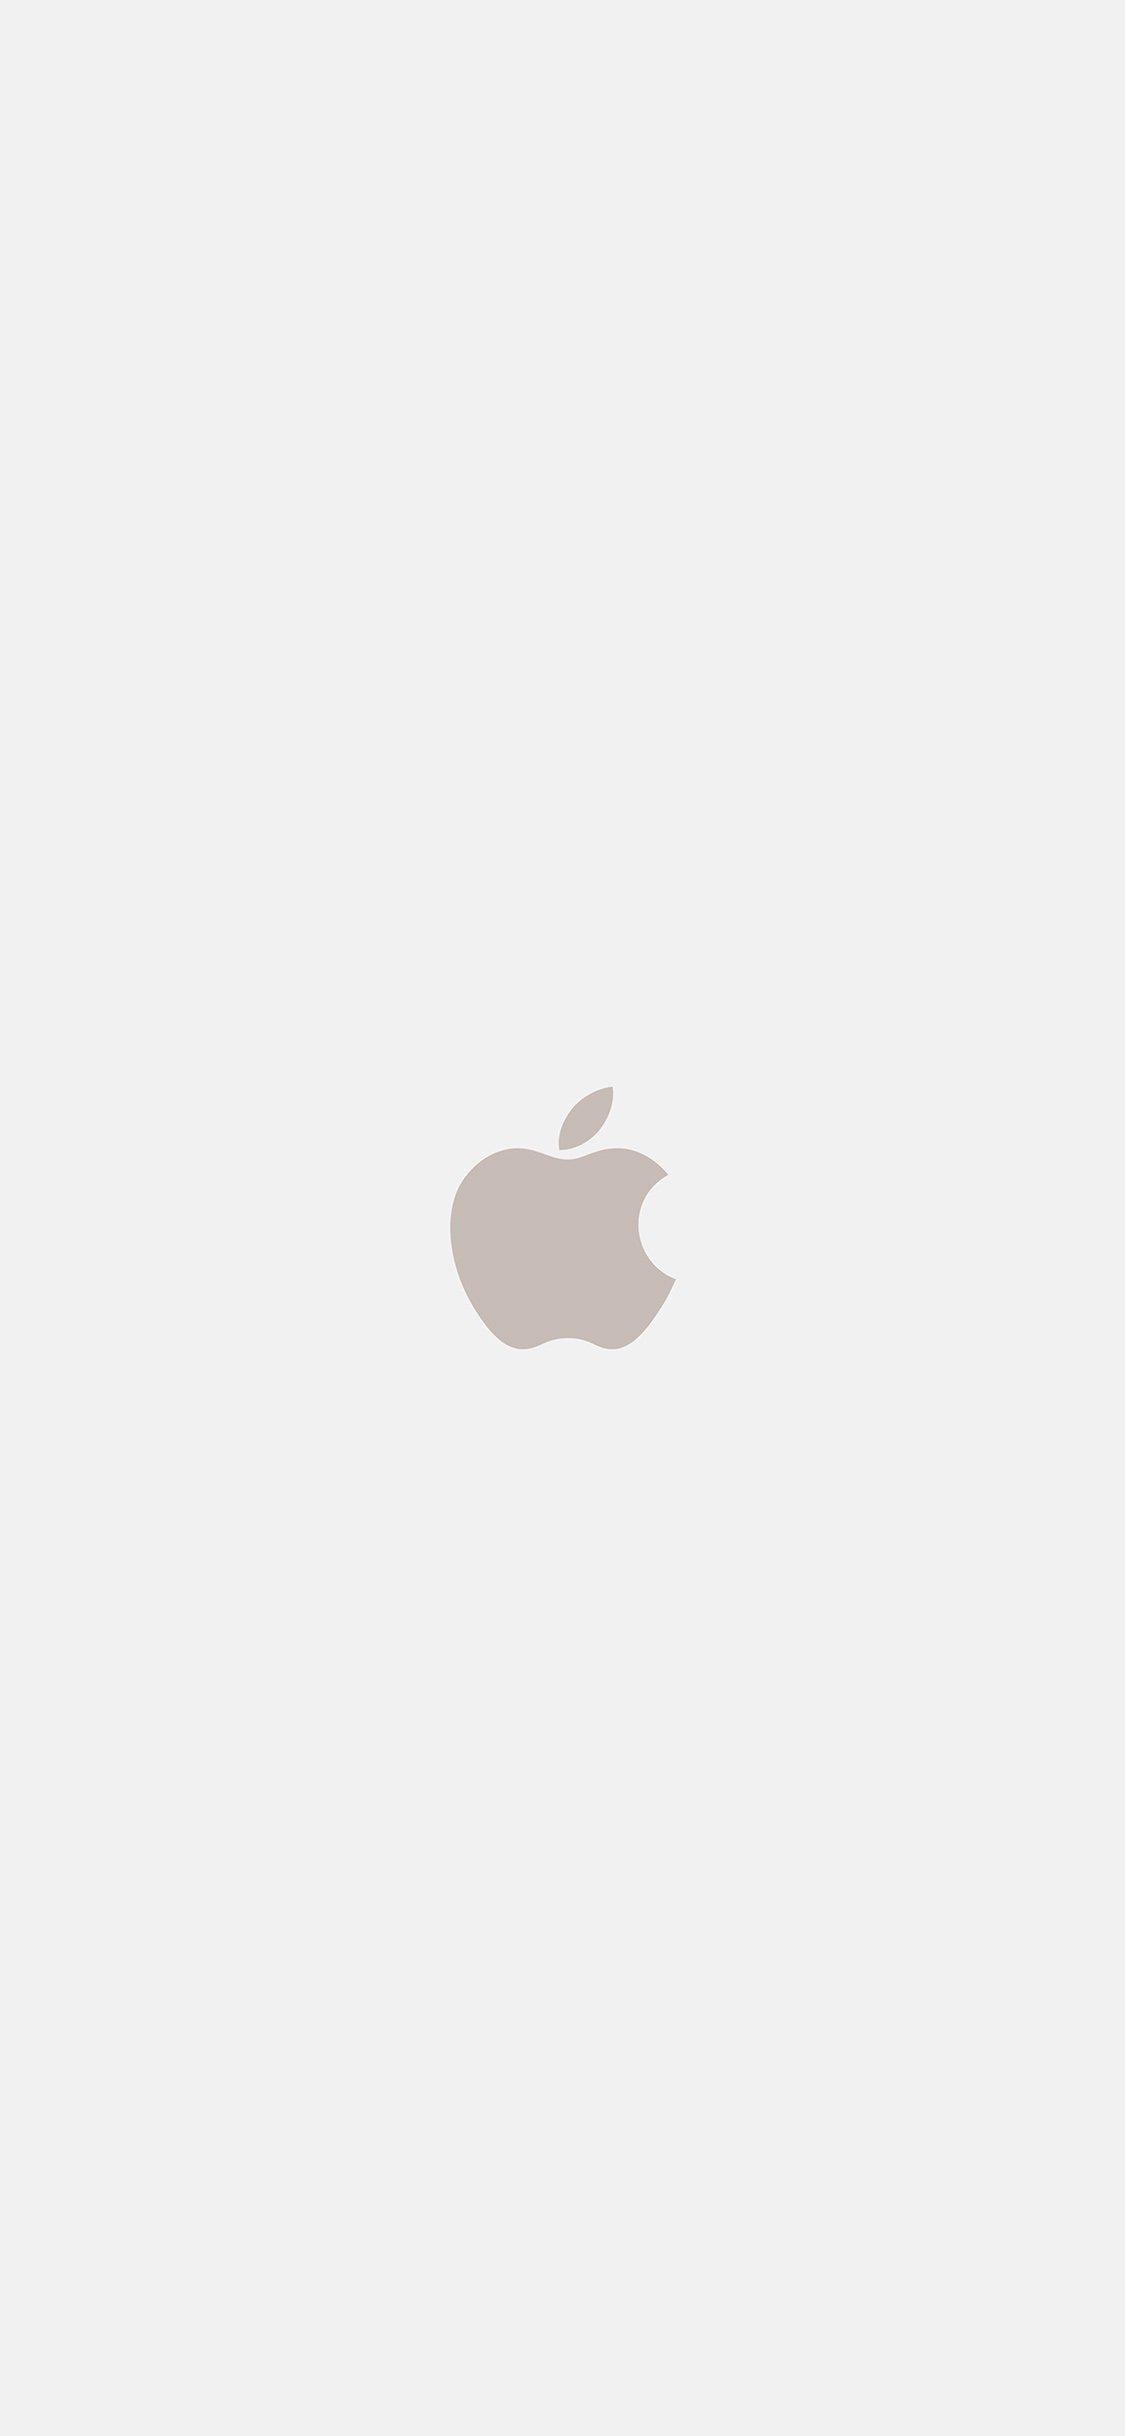 iPhone X wallpaper. iphone7 apple logo white gold art illustration